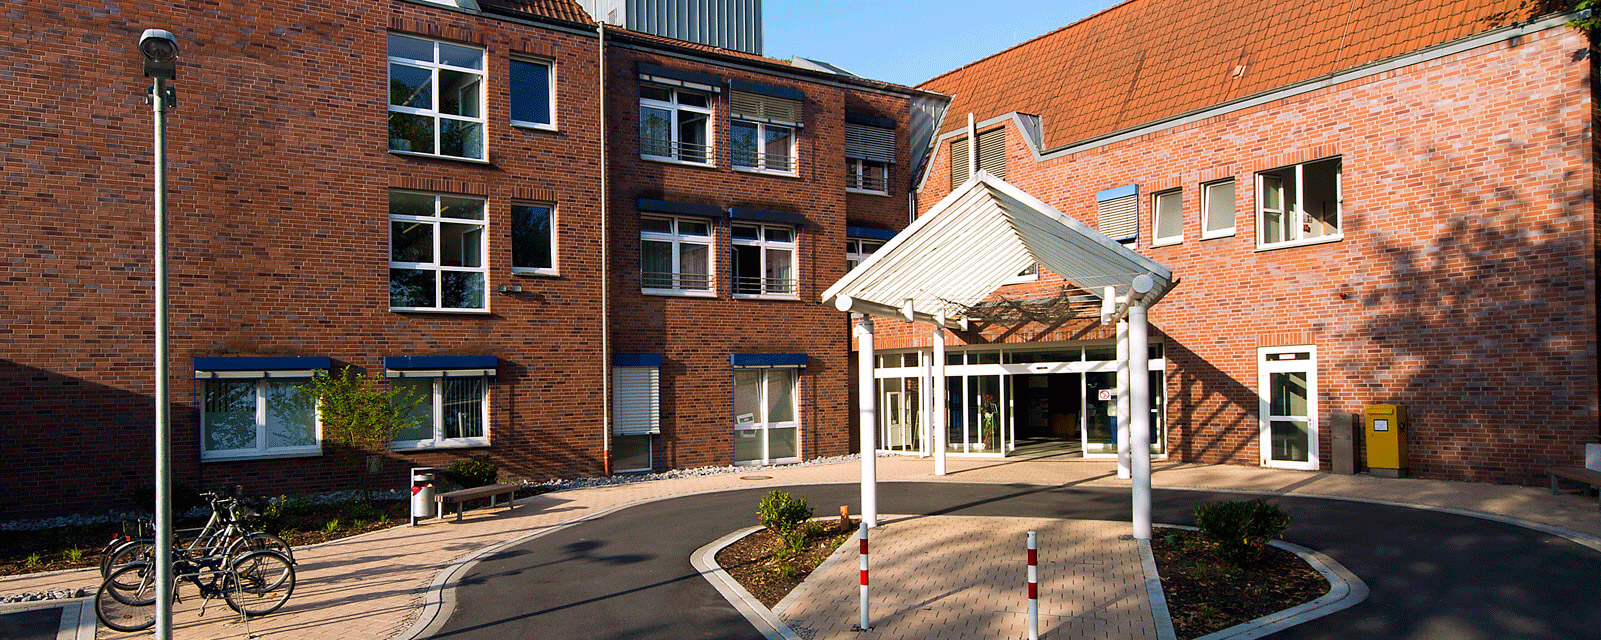 Foto: Eingang Kath. Krankenhaus Dortmund-West